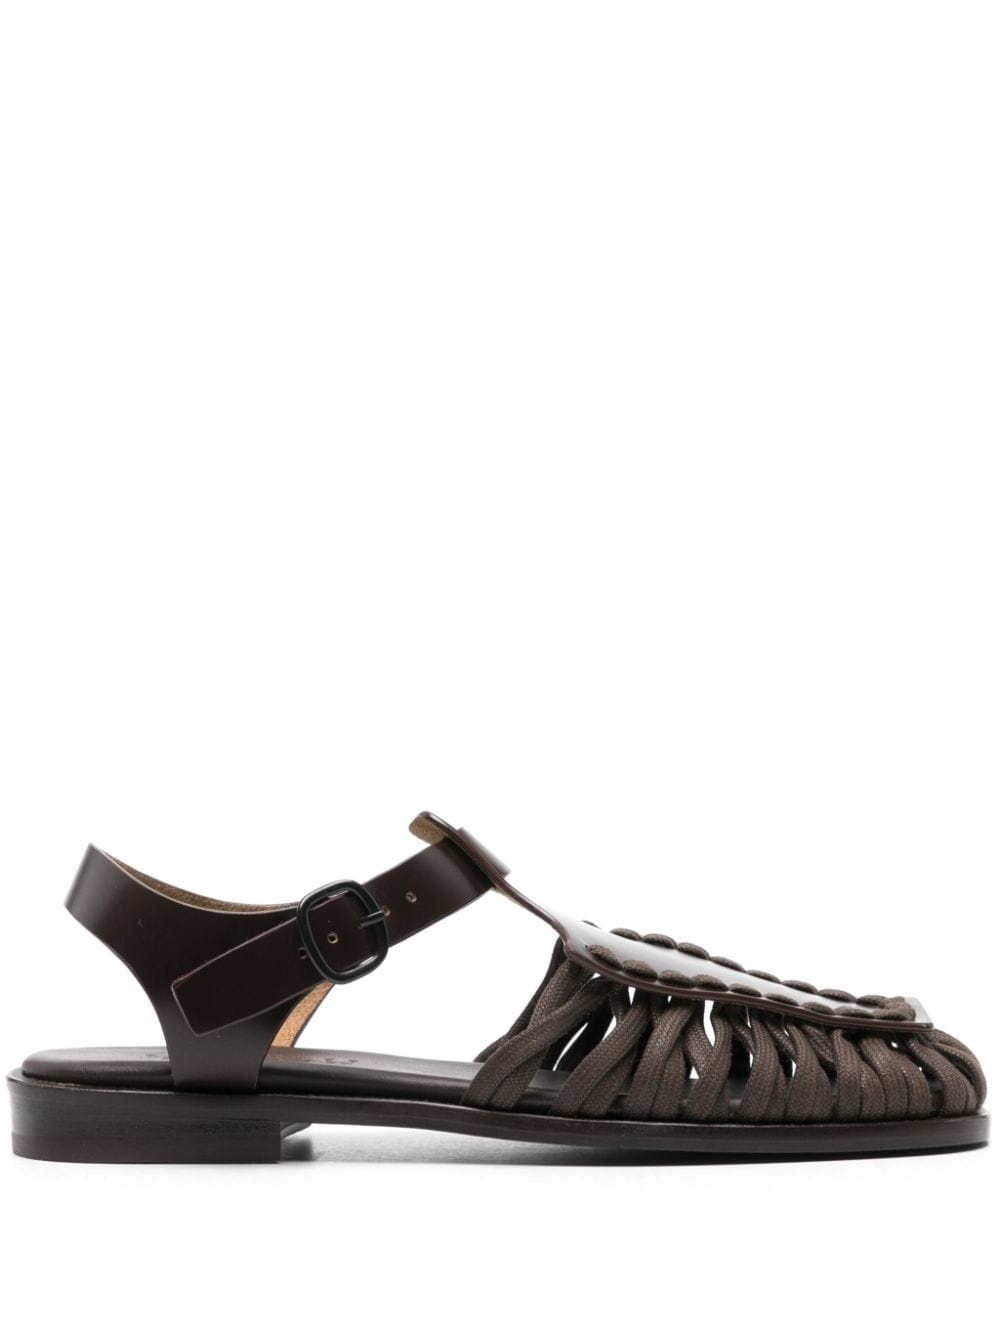 Alaro leather sandals - 1